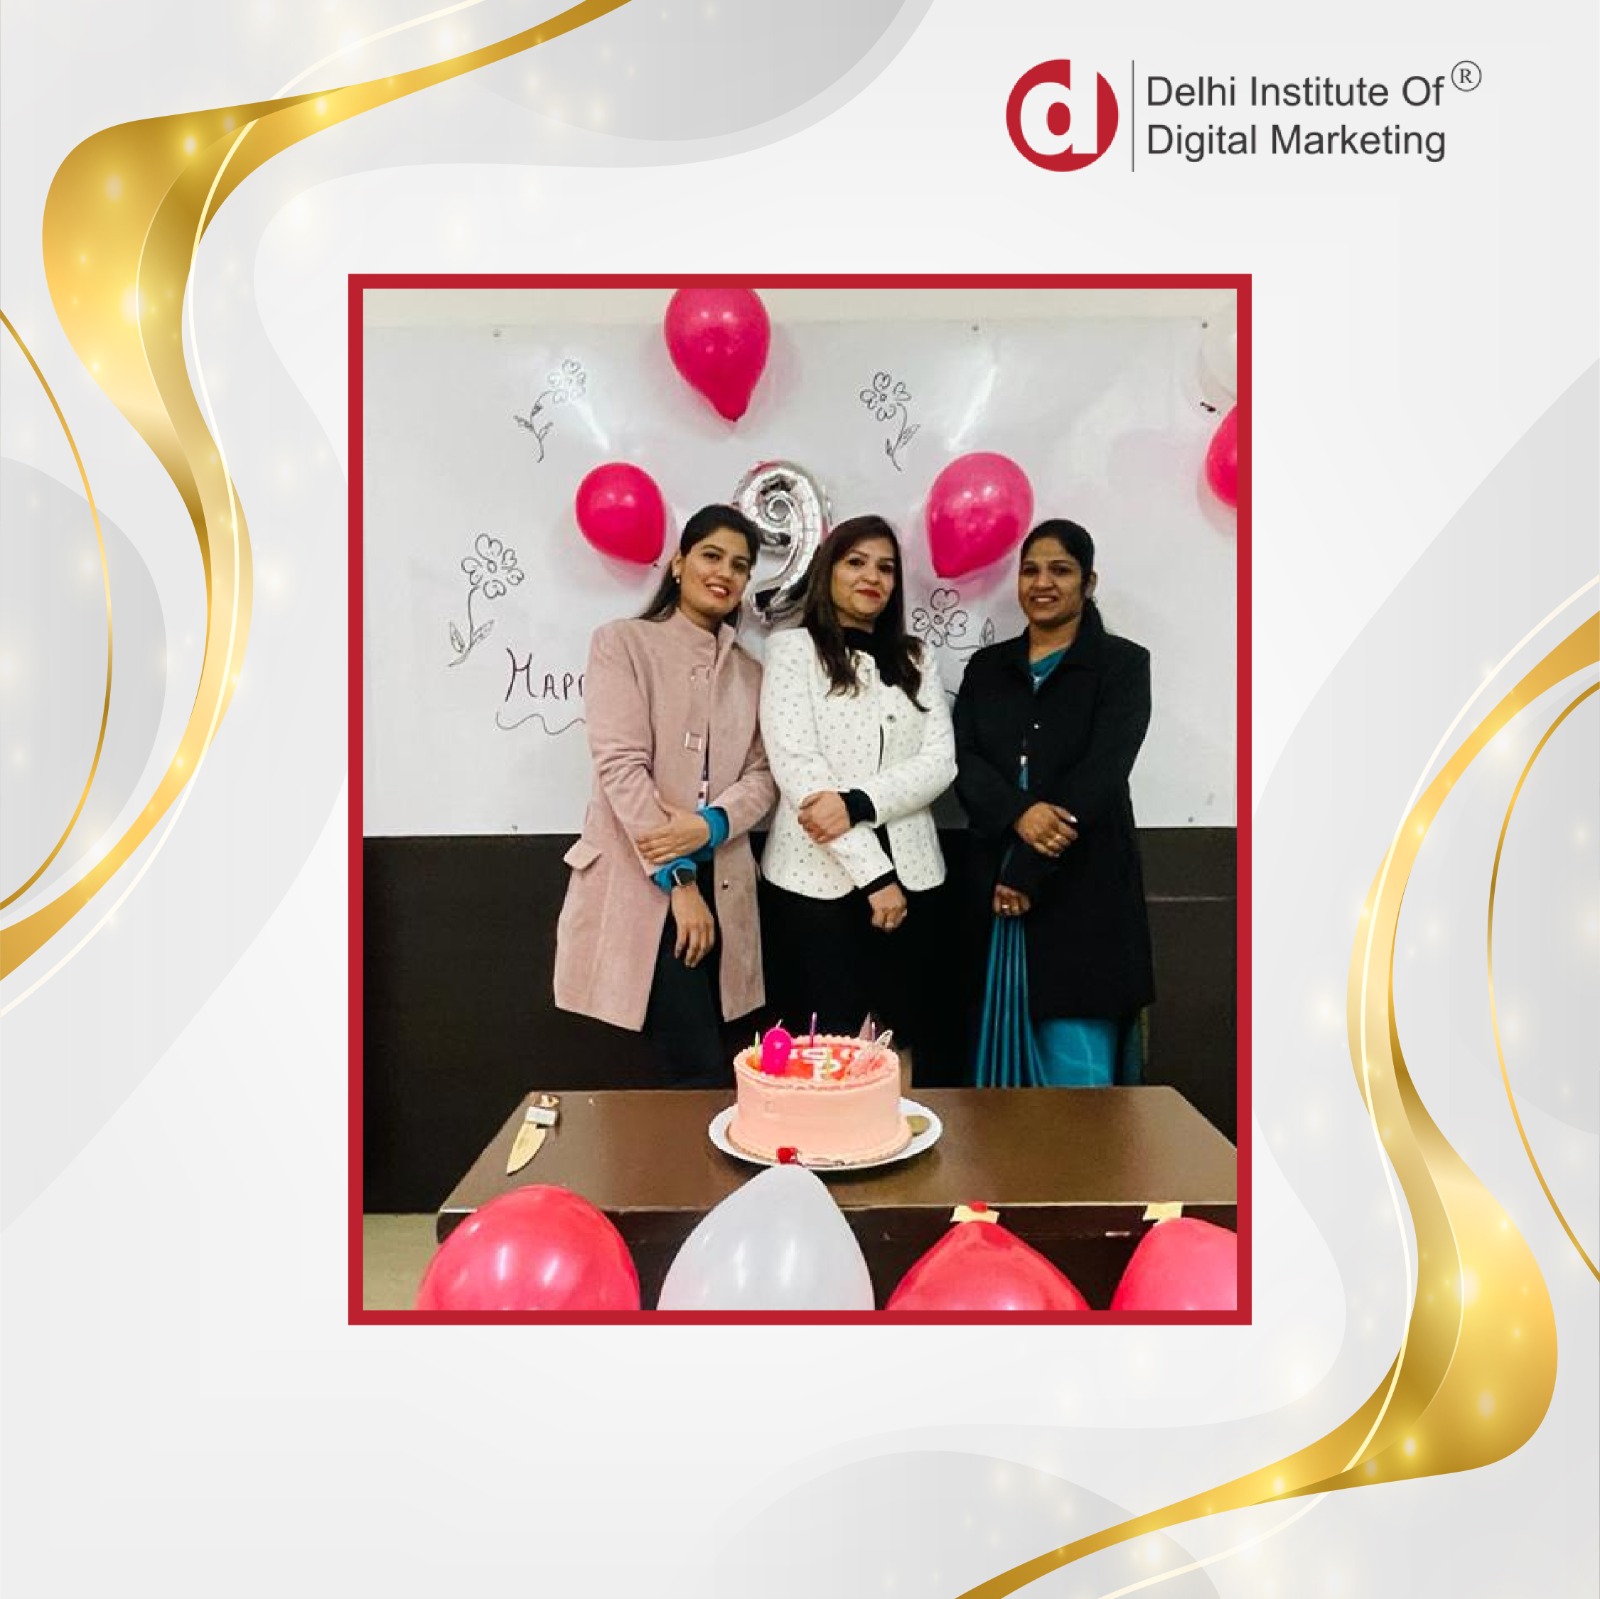 DIDM’s Satya Niketan Branch Celebrates Its 9th Anniversary